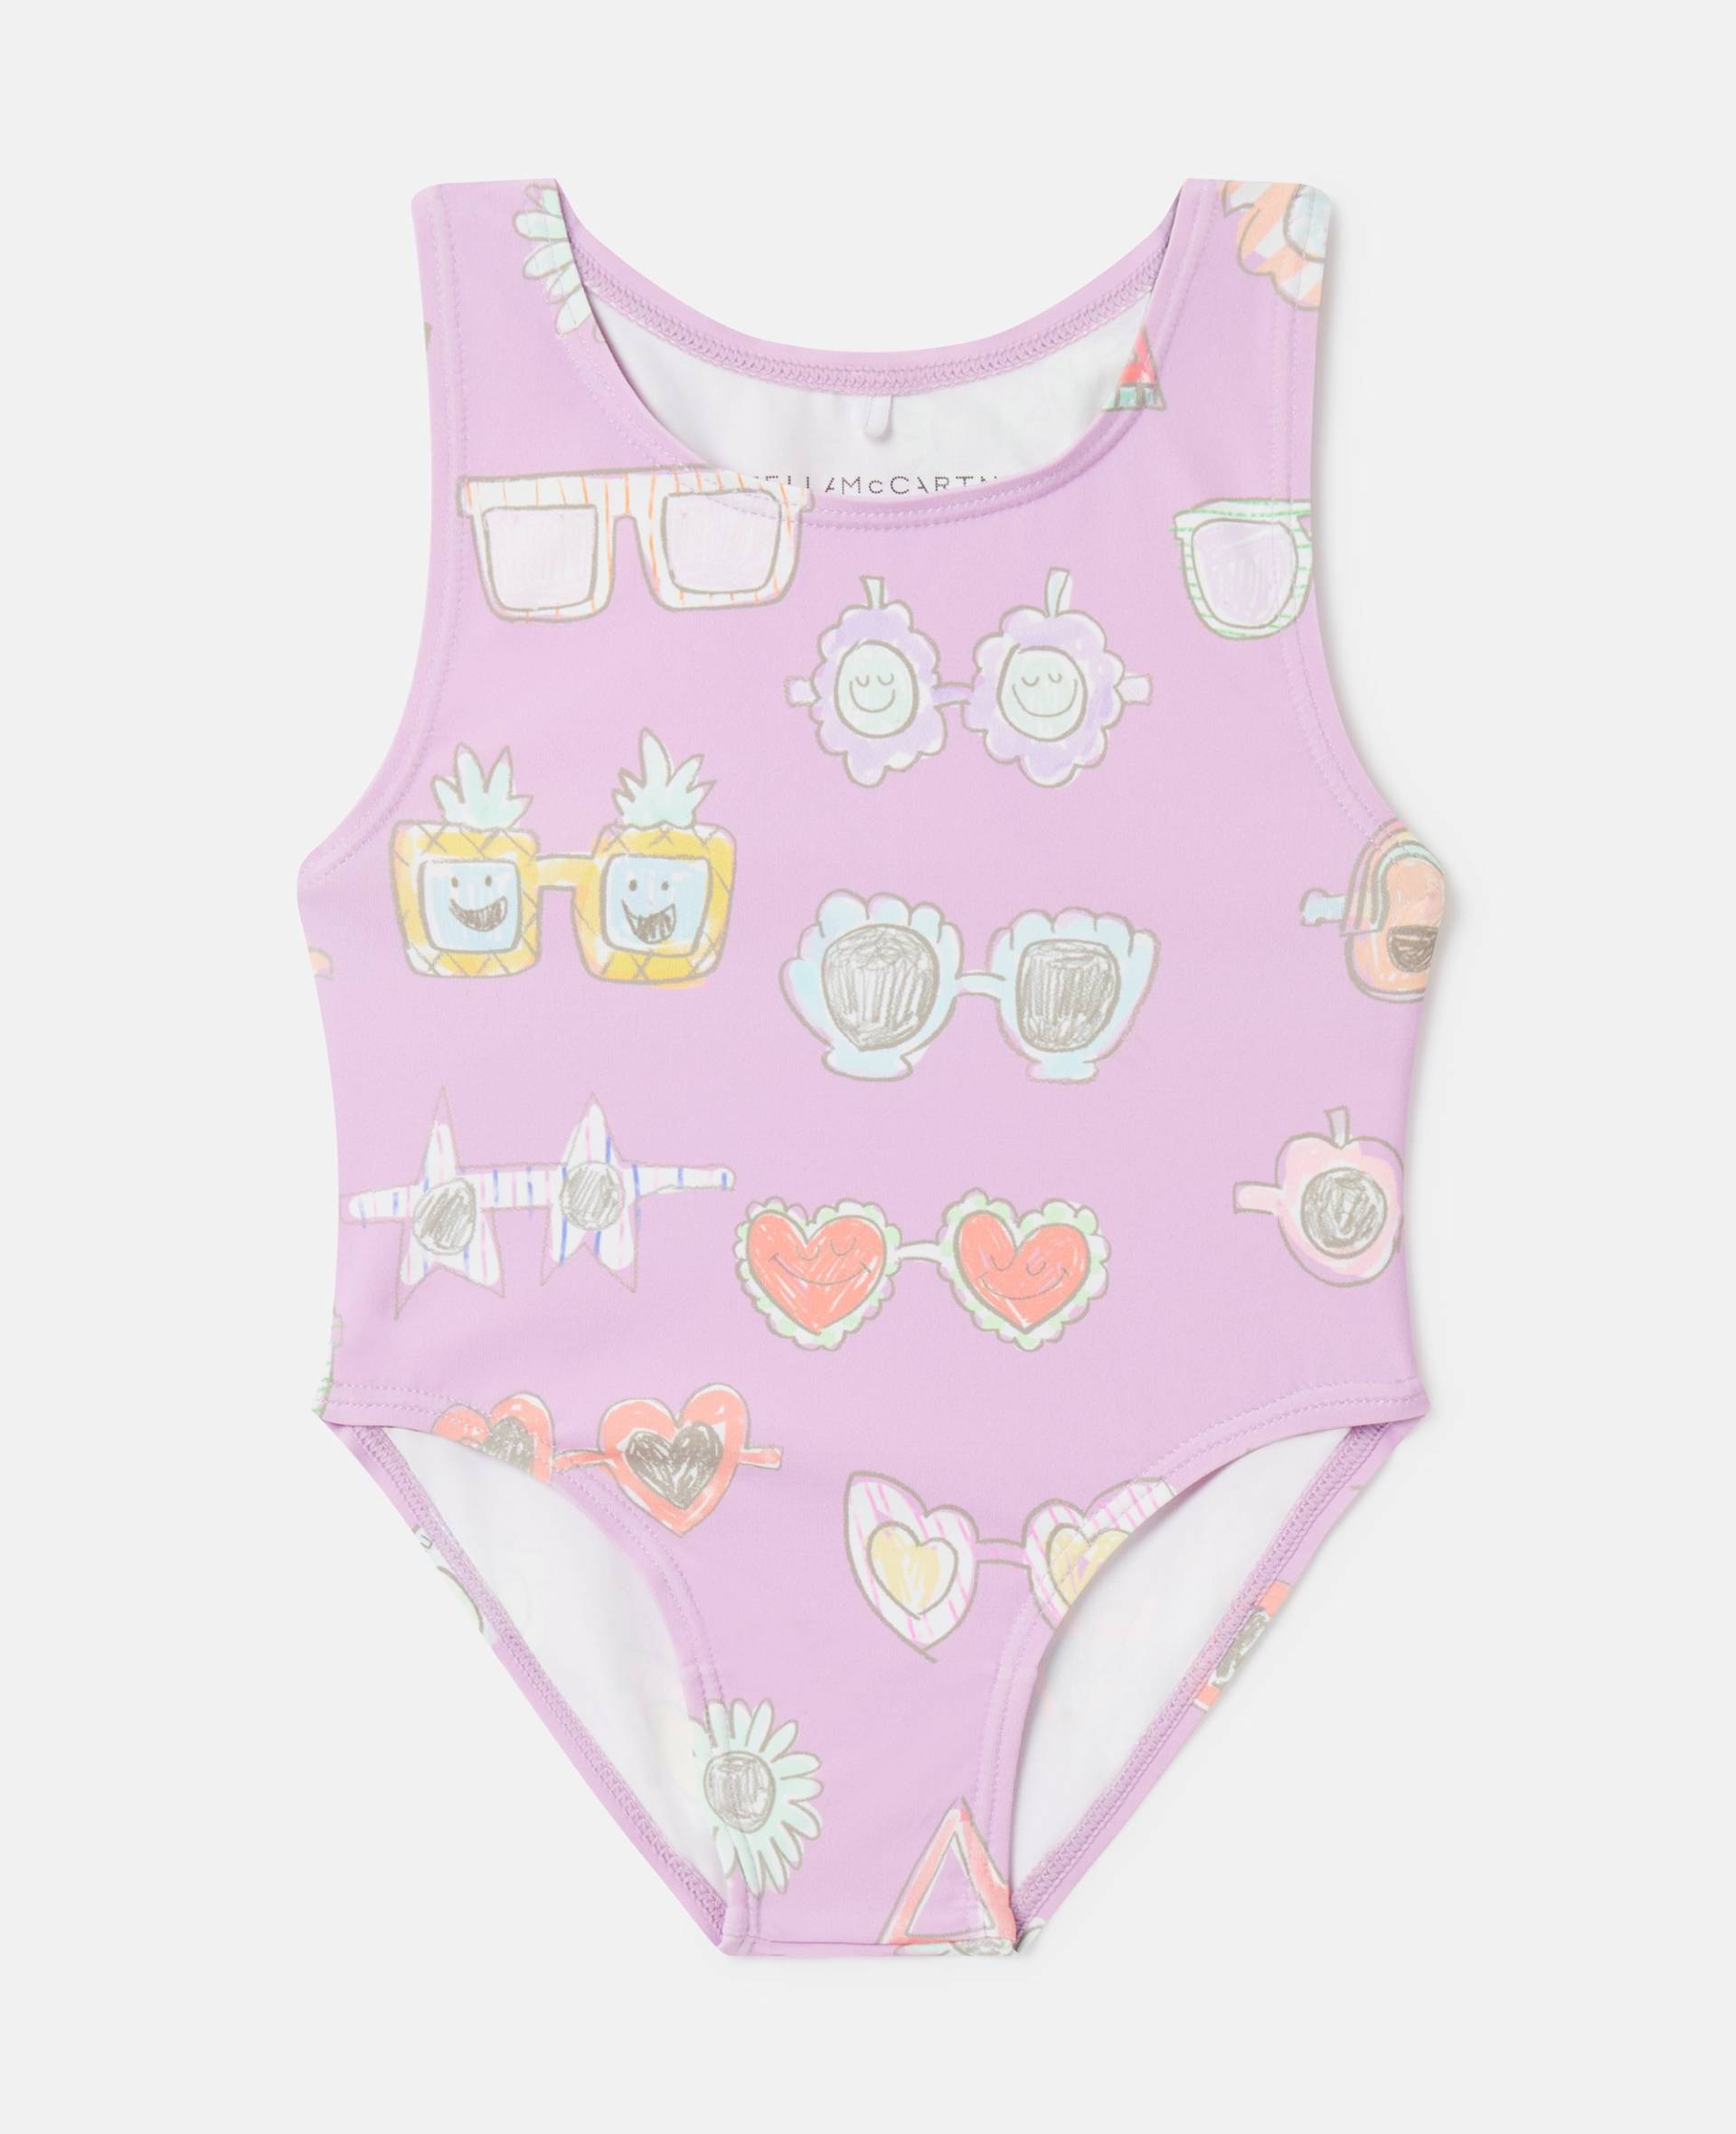 Stella McCartney - Sunglasses Doodle Print Swimsuit, Frau, Pink, Größe: 9m von Stella McCartney